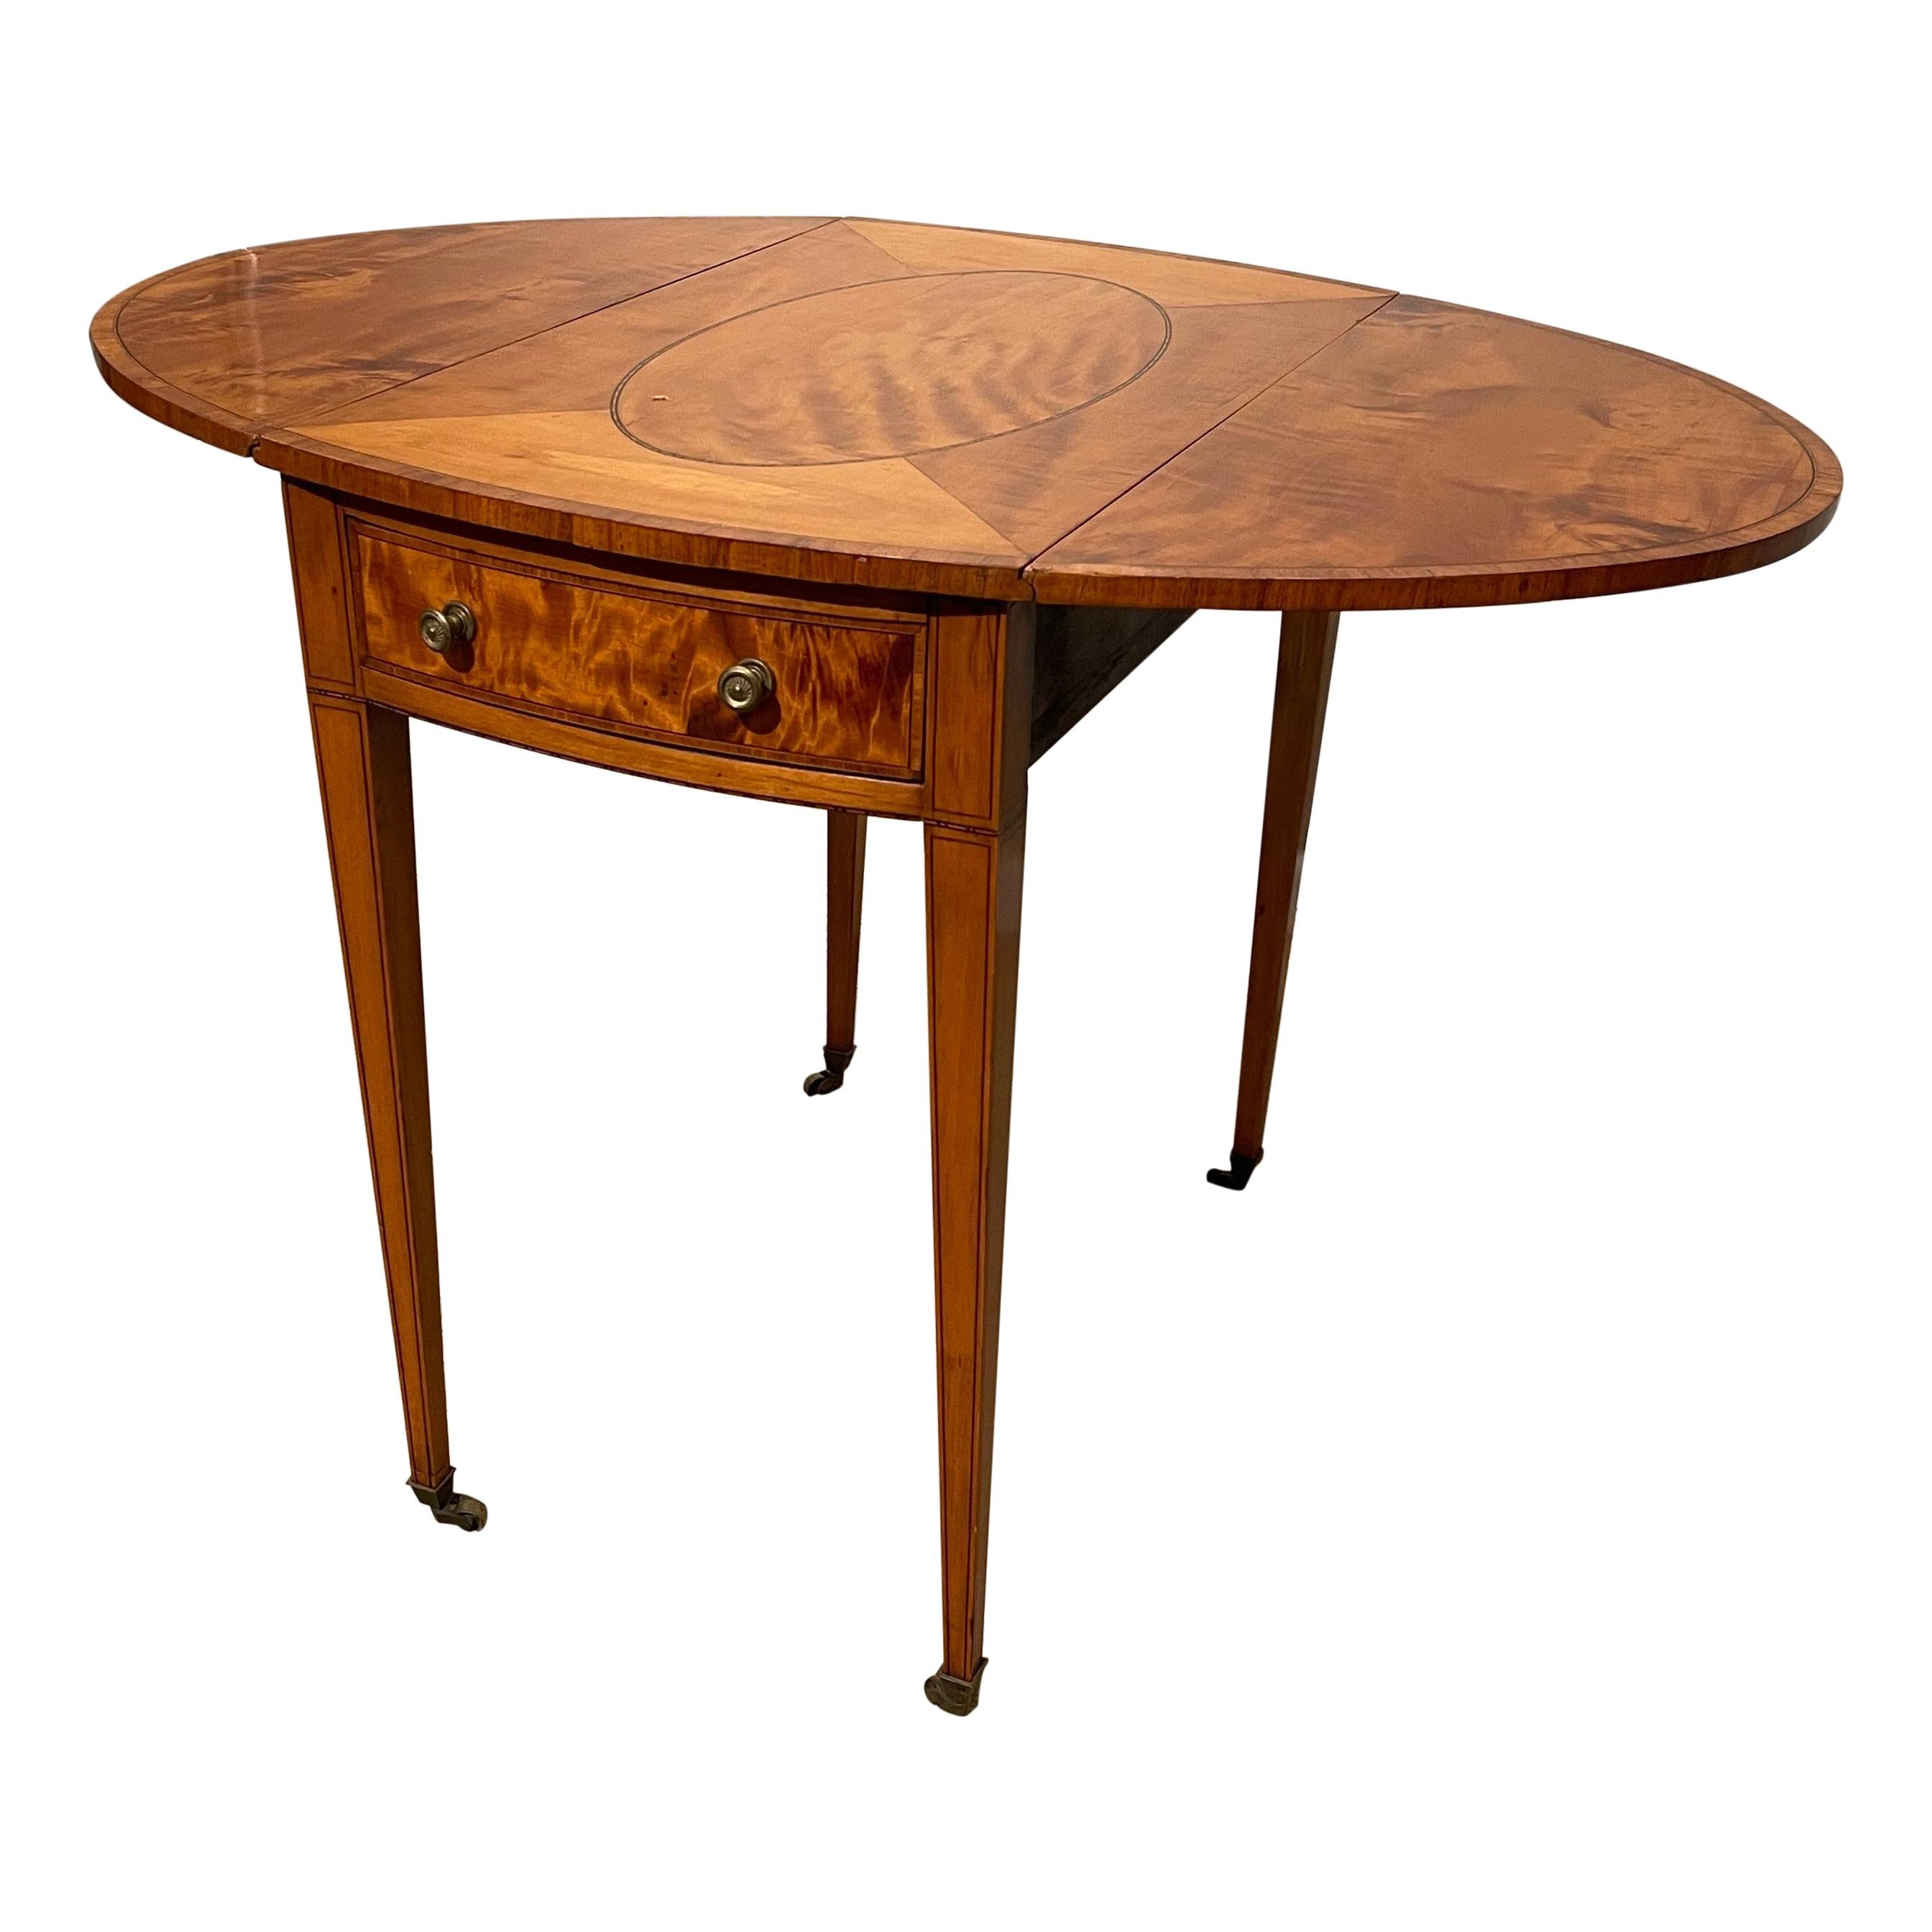 Ovaler Sheraton-Pembroke-Tisch aus Seidenholz, um 1790